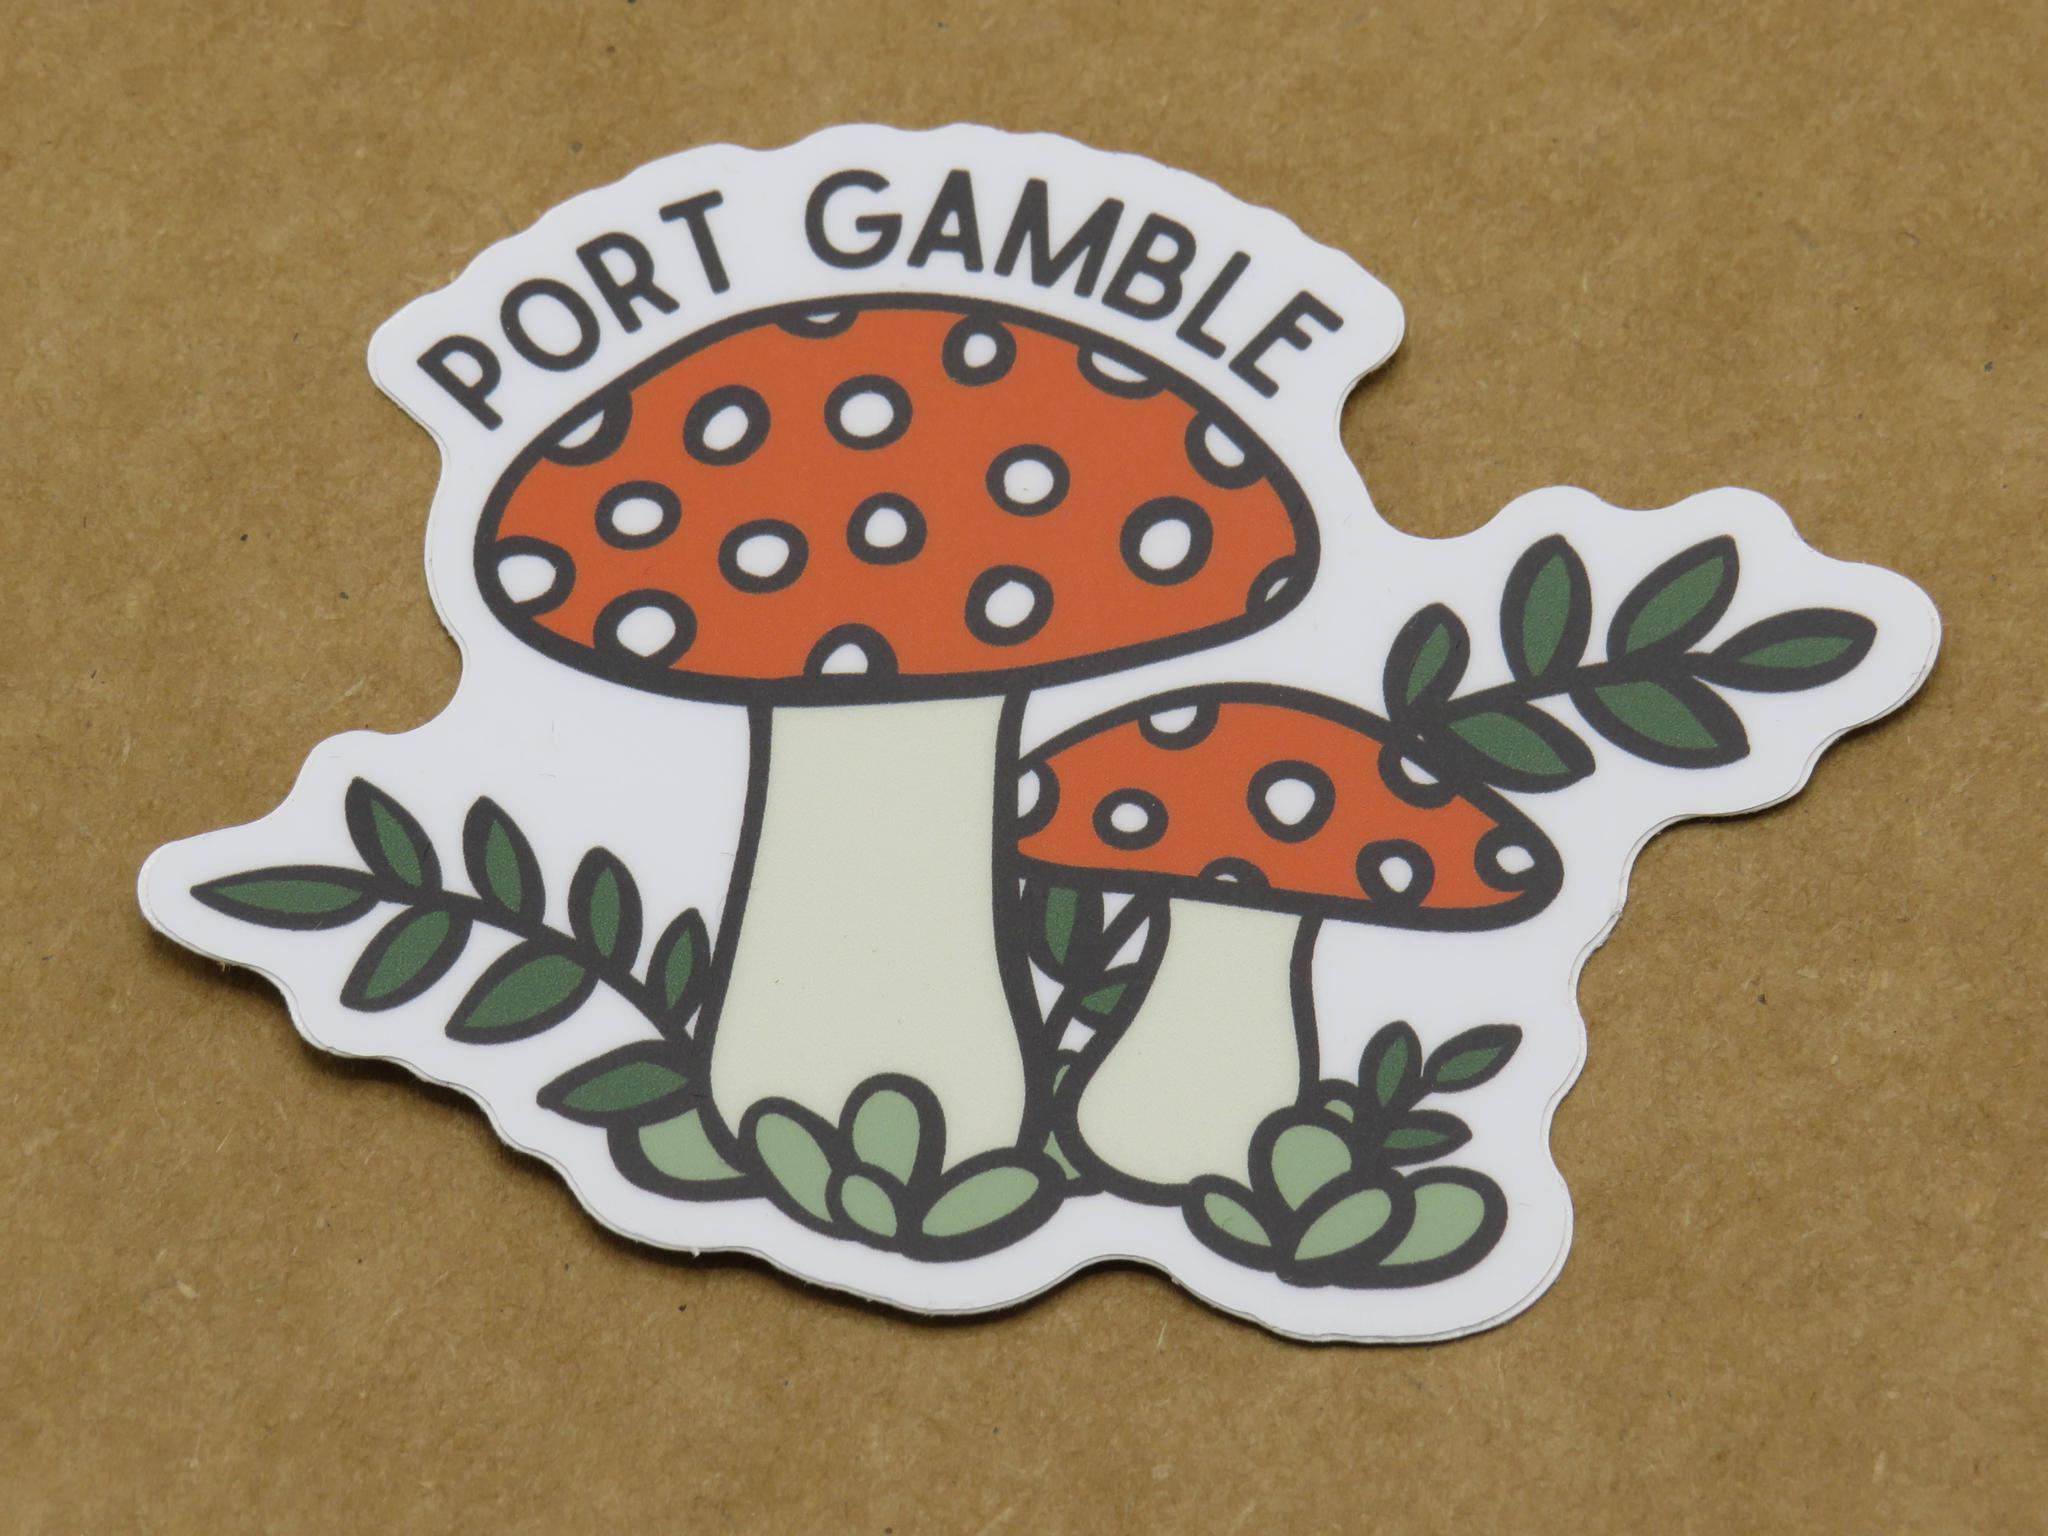 Mushroom with Port Gamble - Sticker 1397N